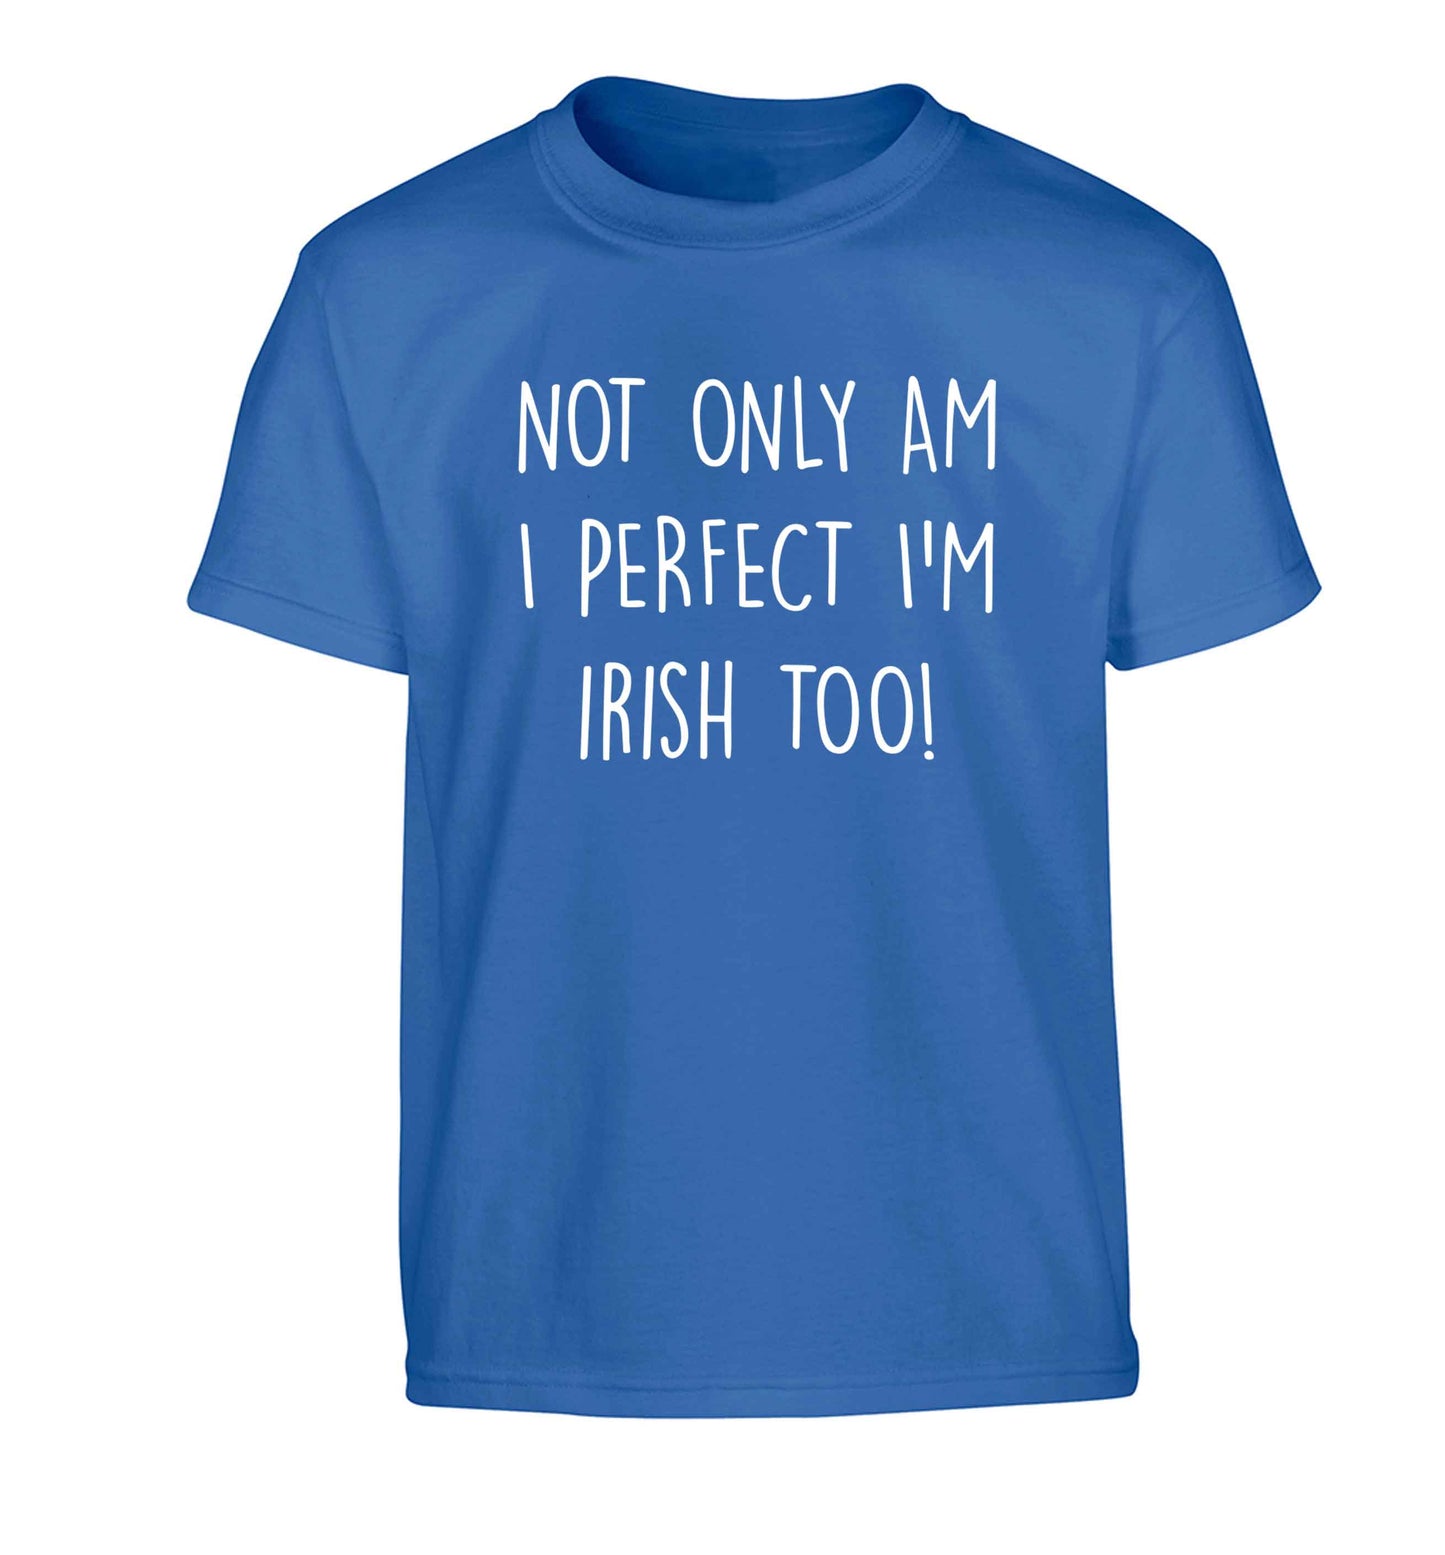 Not only am I perfect I'm Irish too! Children's blue Tshirt 12-13 Years